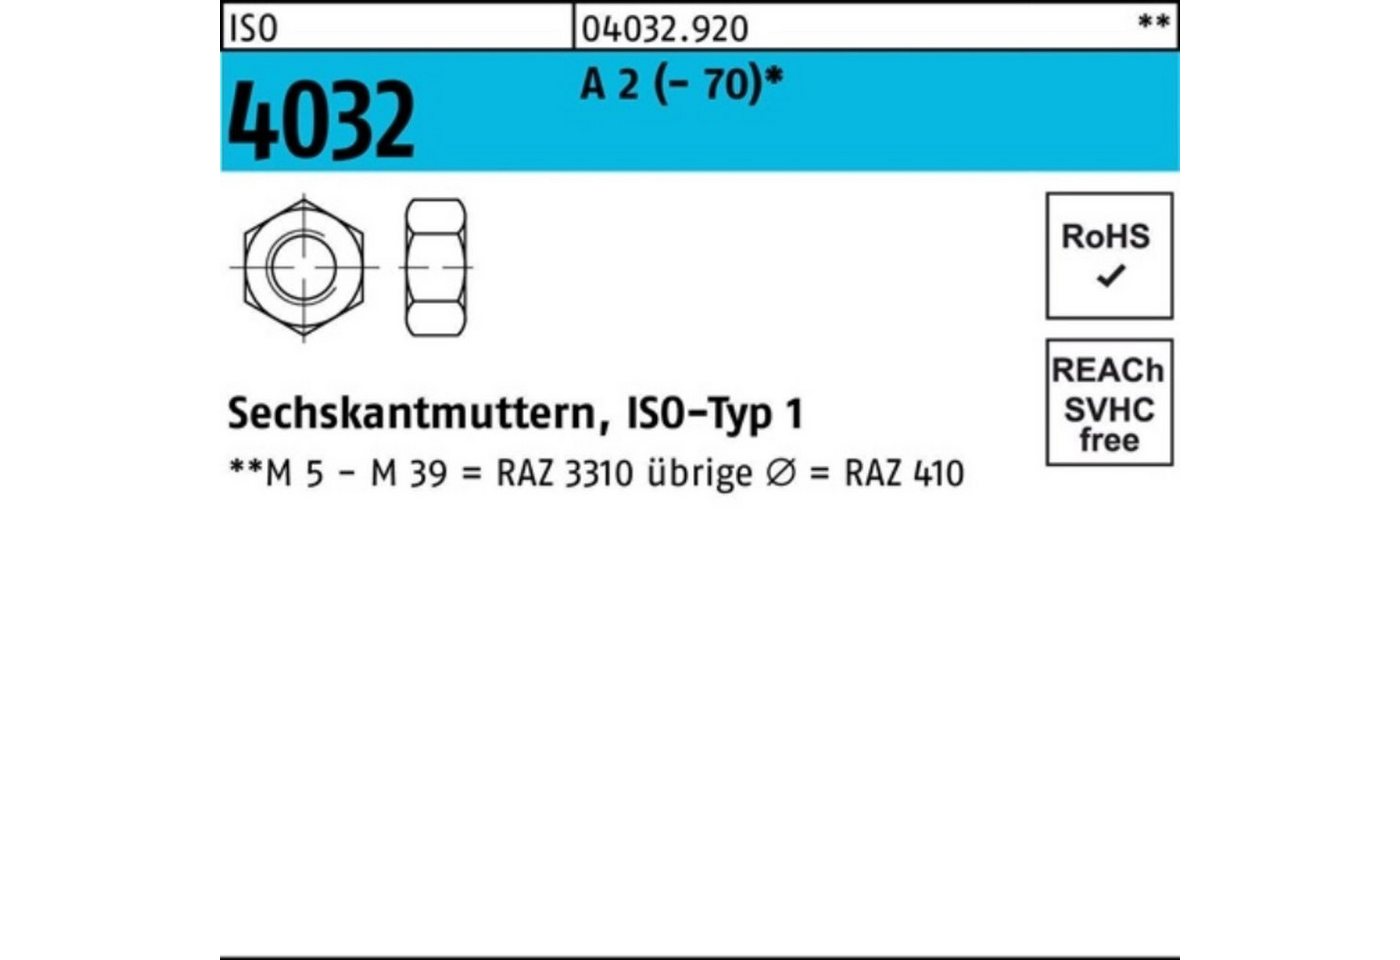 Bufab Muttern 250er Pack Sechskantmutter ISO 4032 M12 A 2 (70) 250 Stück ISO 4032 von Bufab